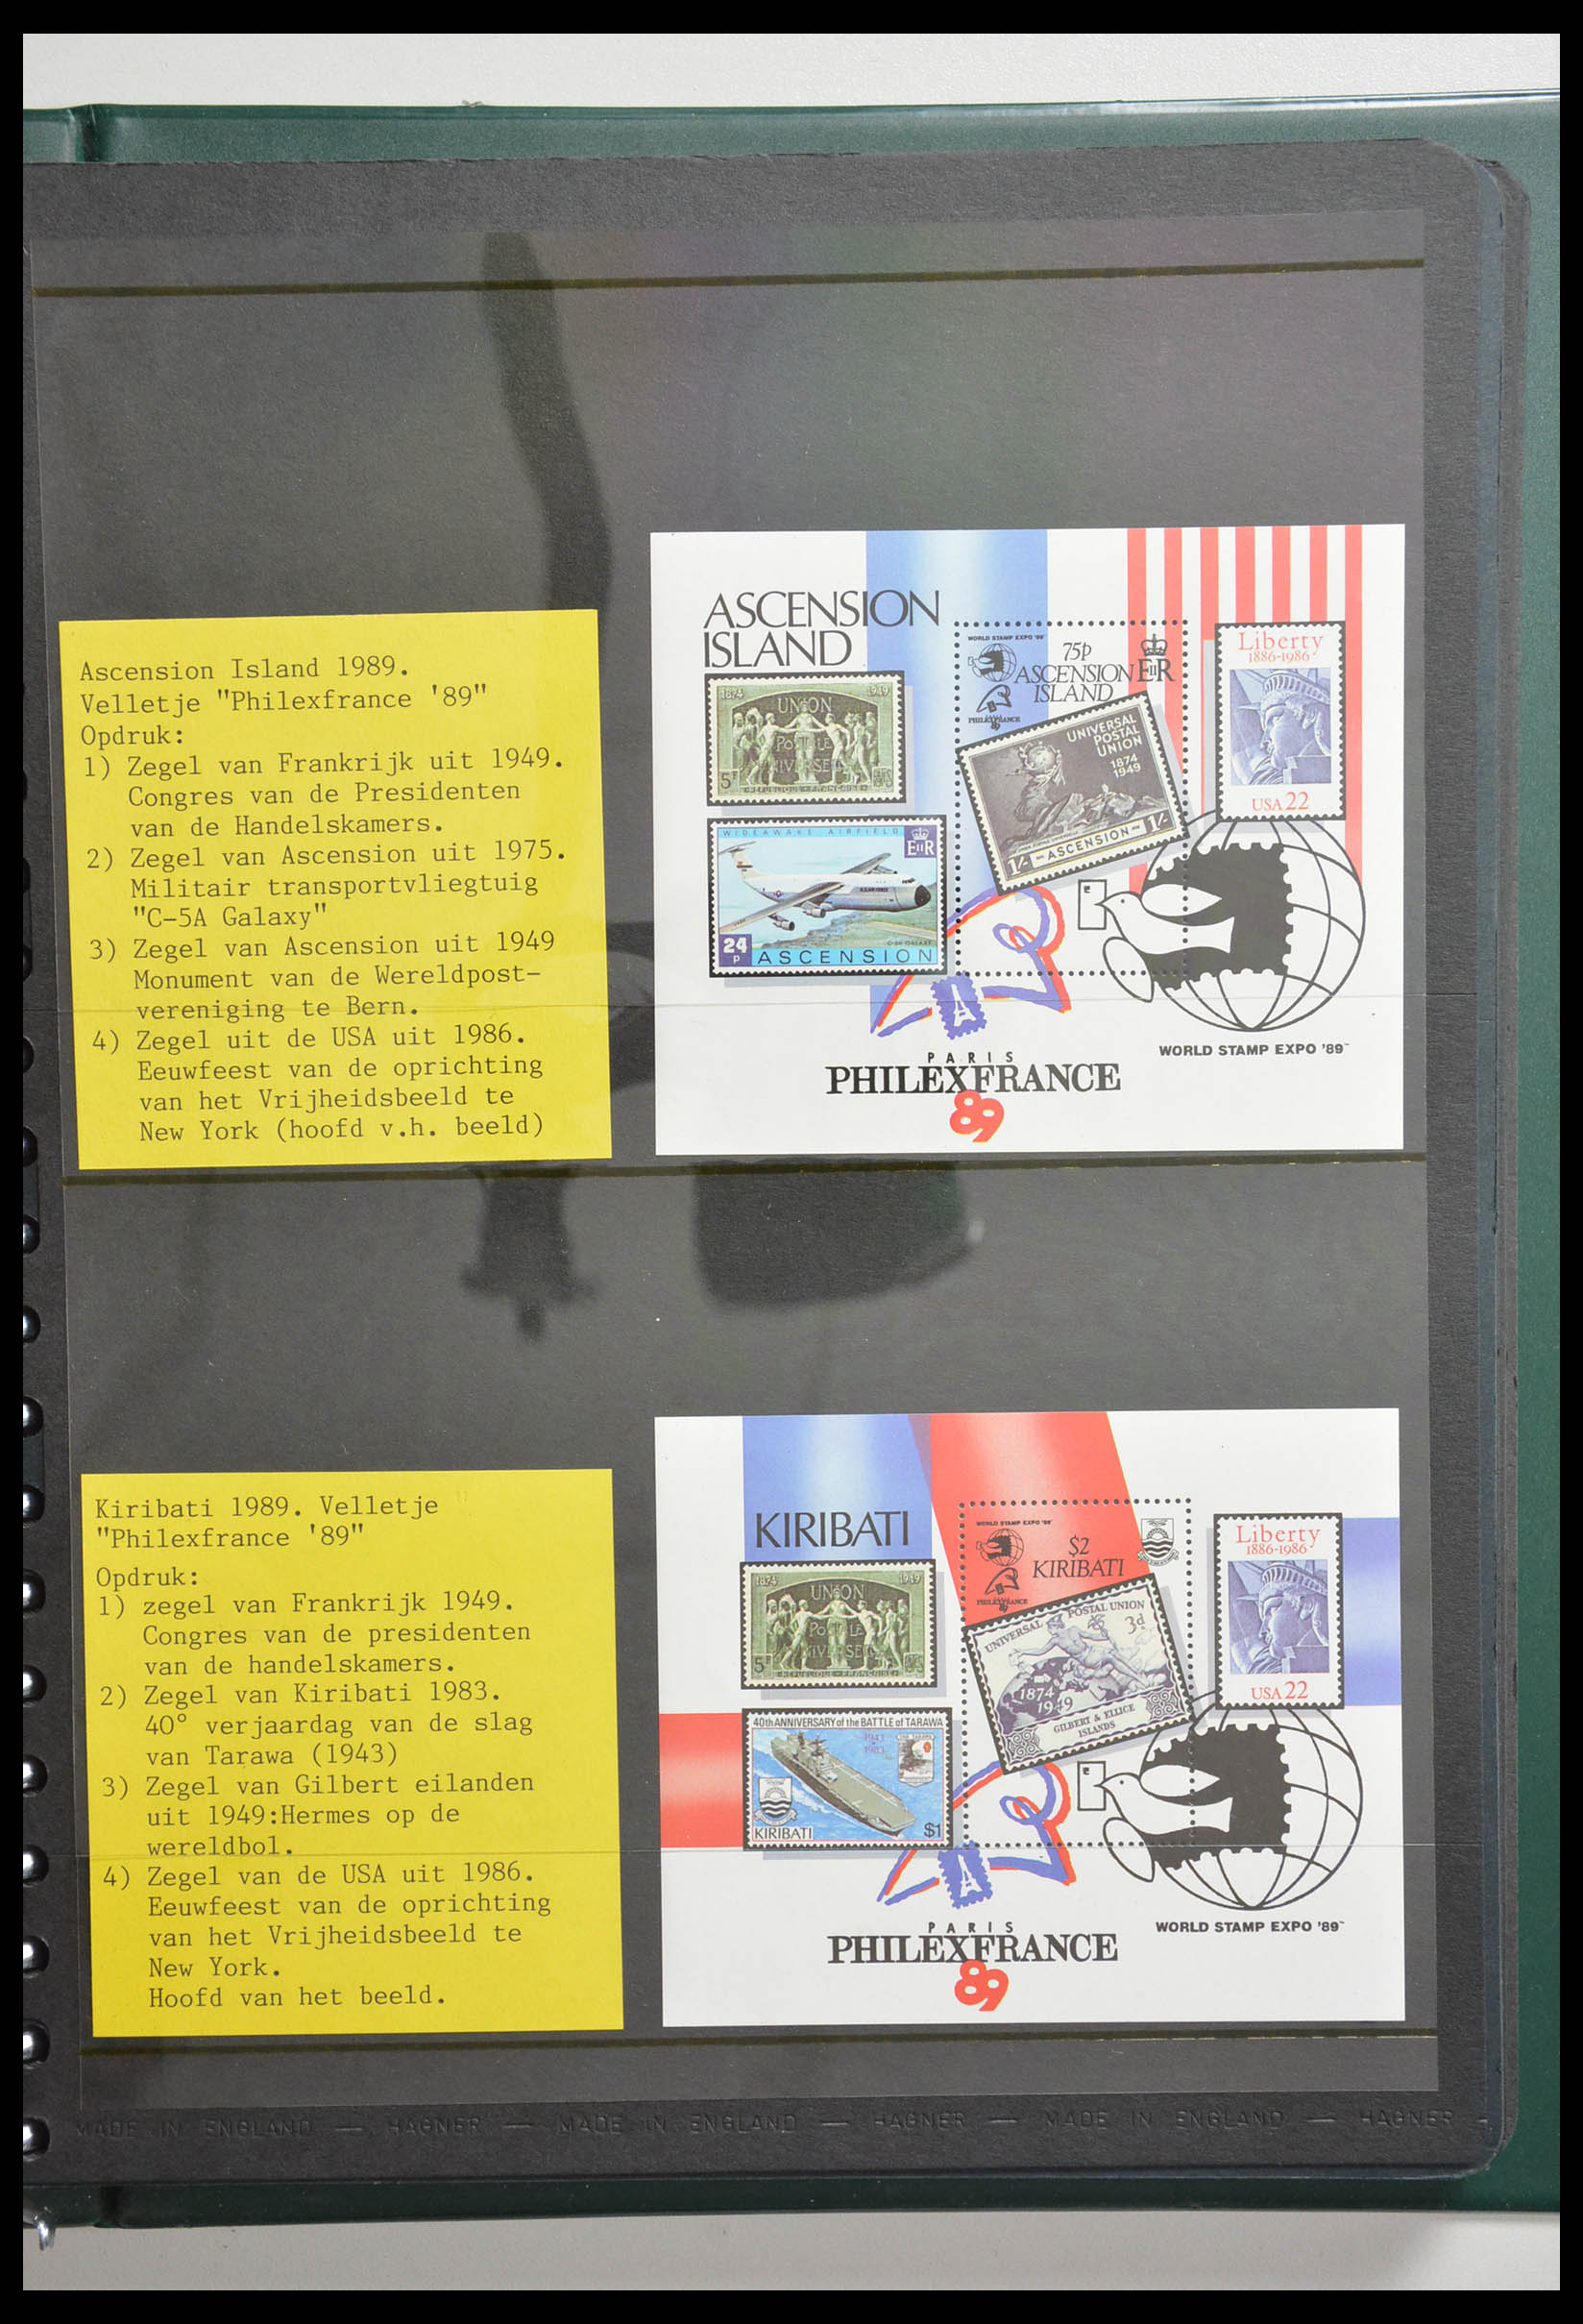 28337 096 - 28337 Postzegel op postzegel 1840-2001.